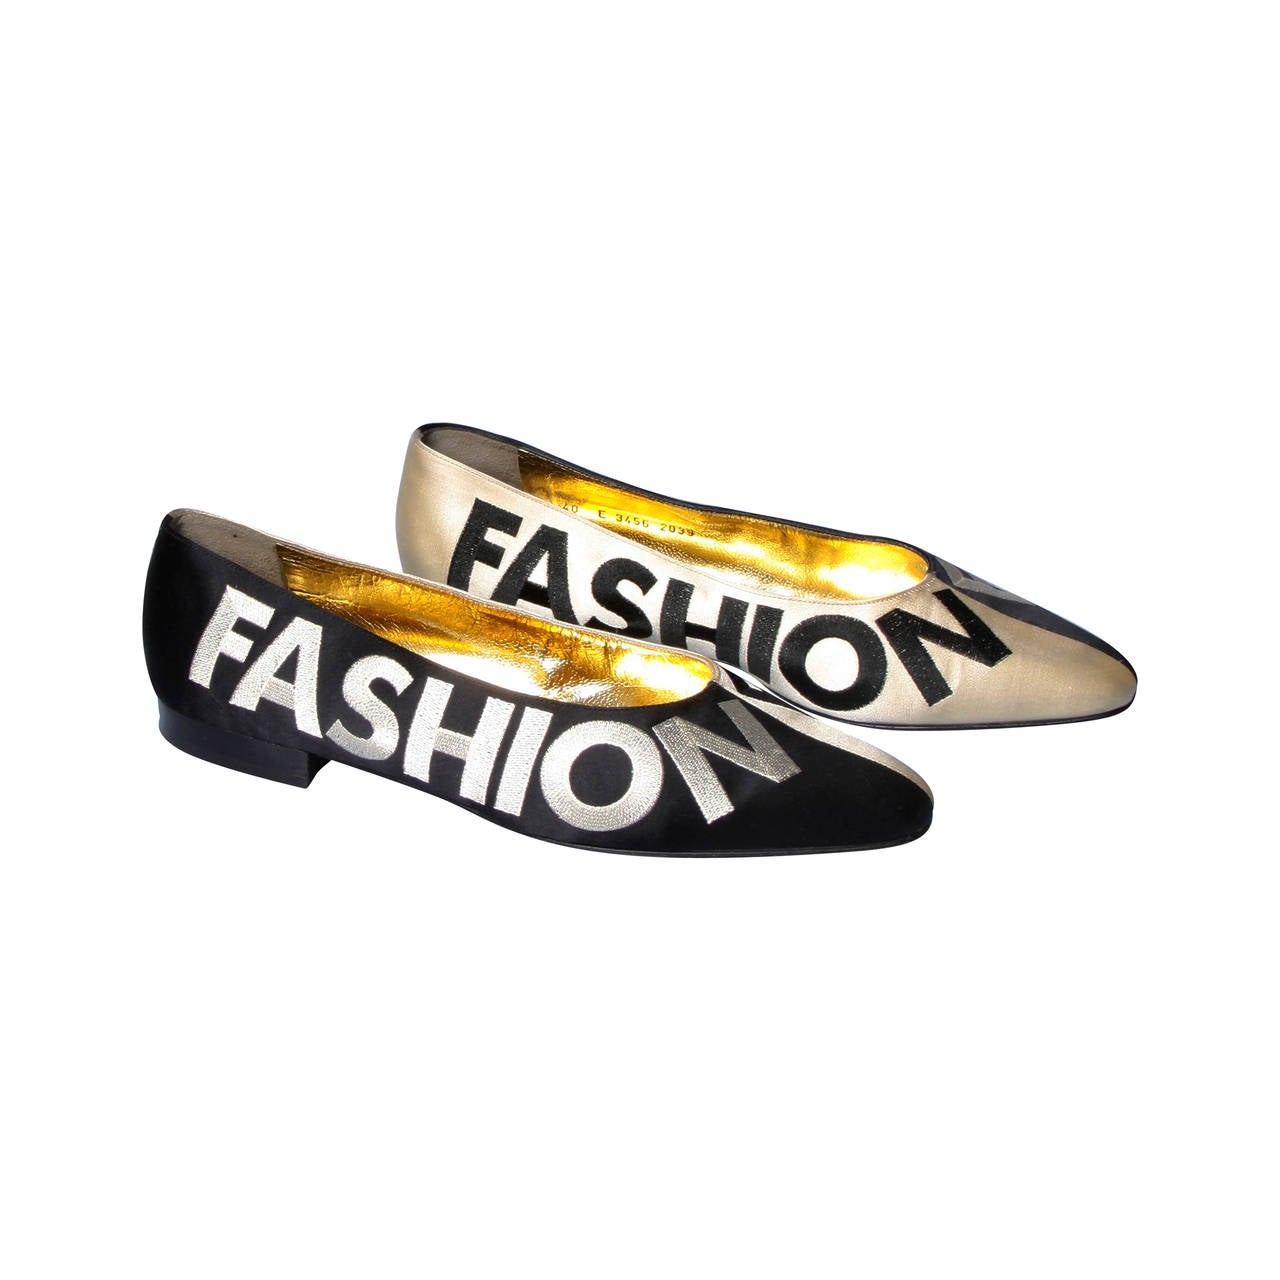 Iconic Moschino Vintage "Fashion" "Fashioff" Shoes Size 40